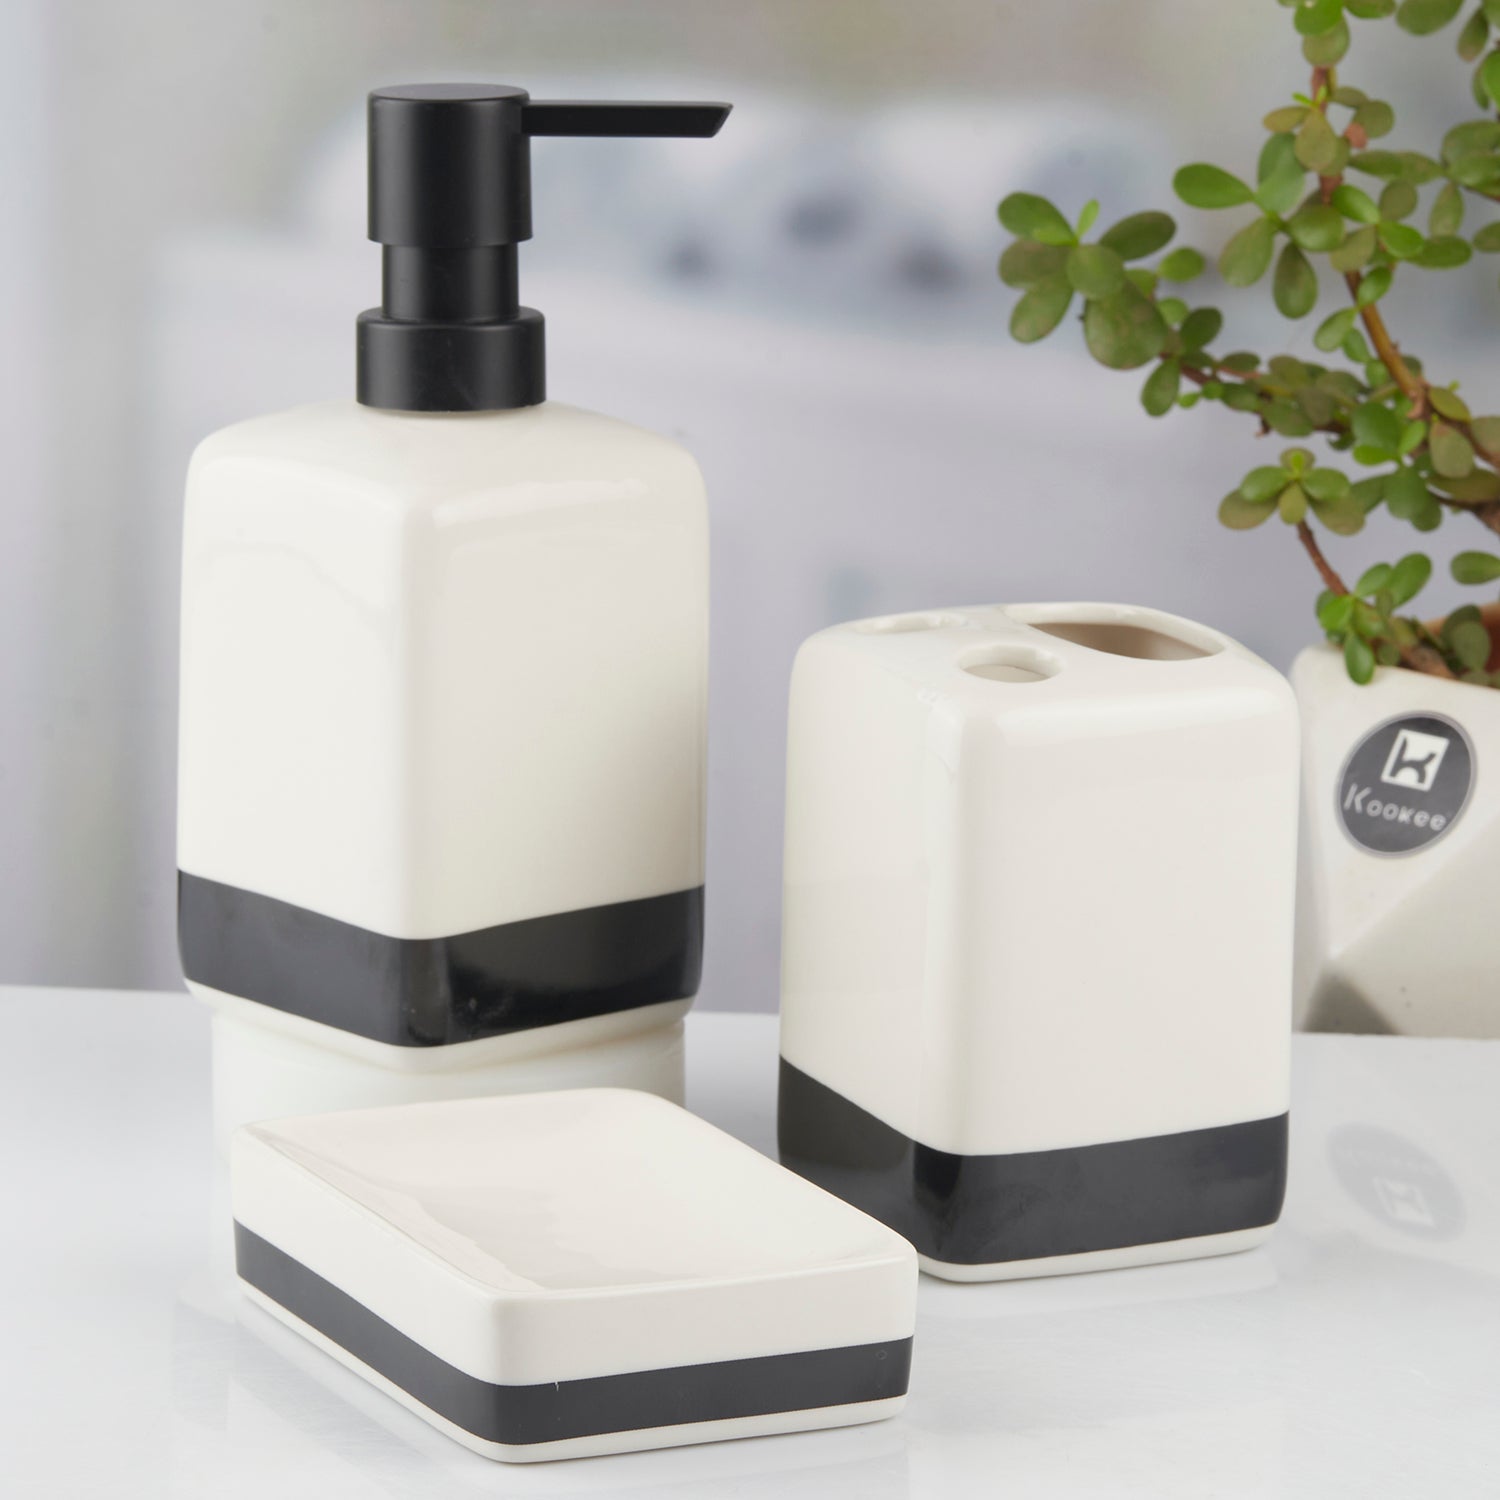 Ceramic Bathroom Set of 3 with Soap Dispenser (10718)